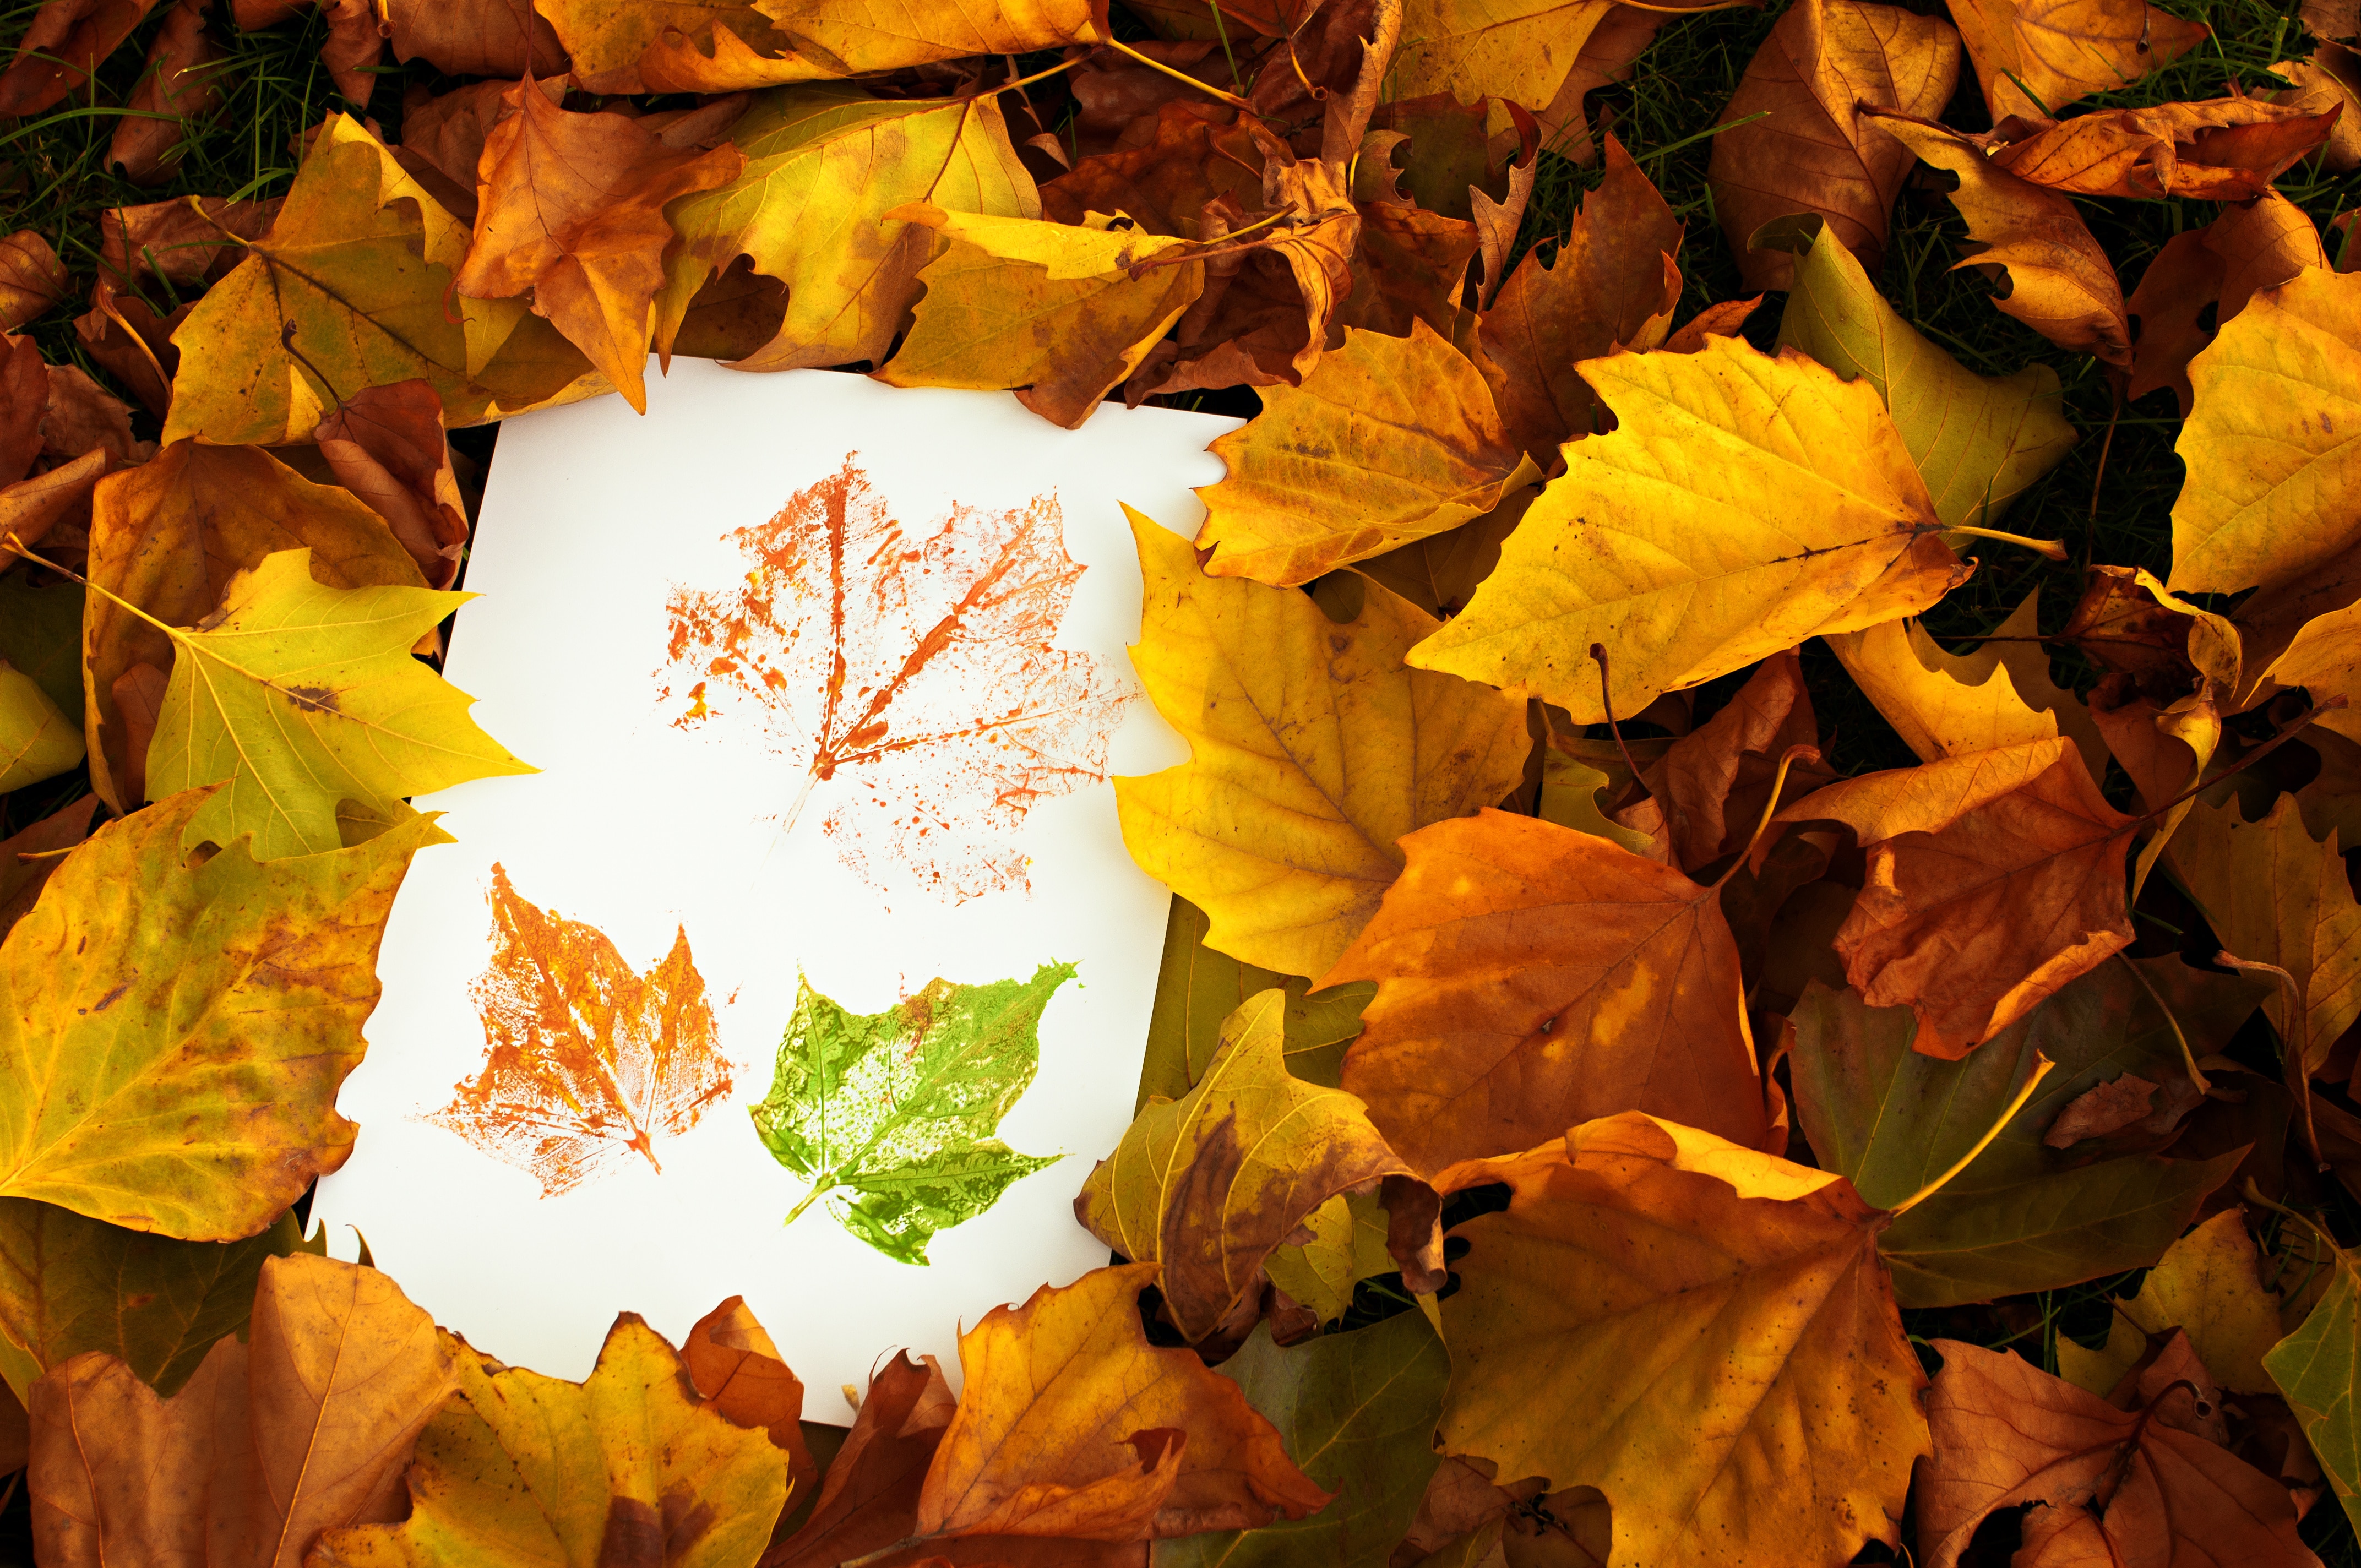 Painted autumn leaf prints amongst beautiful fall leaves